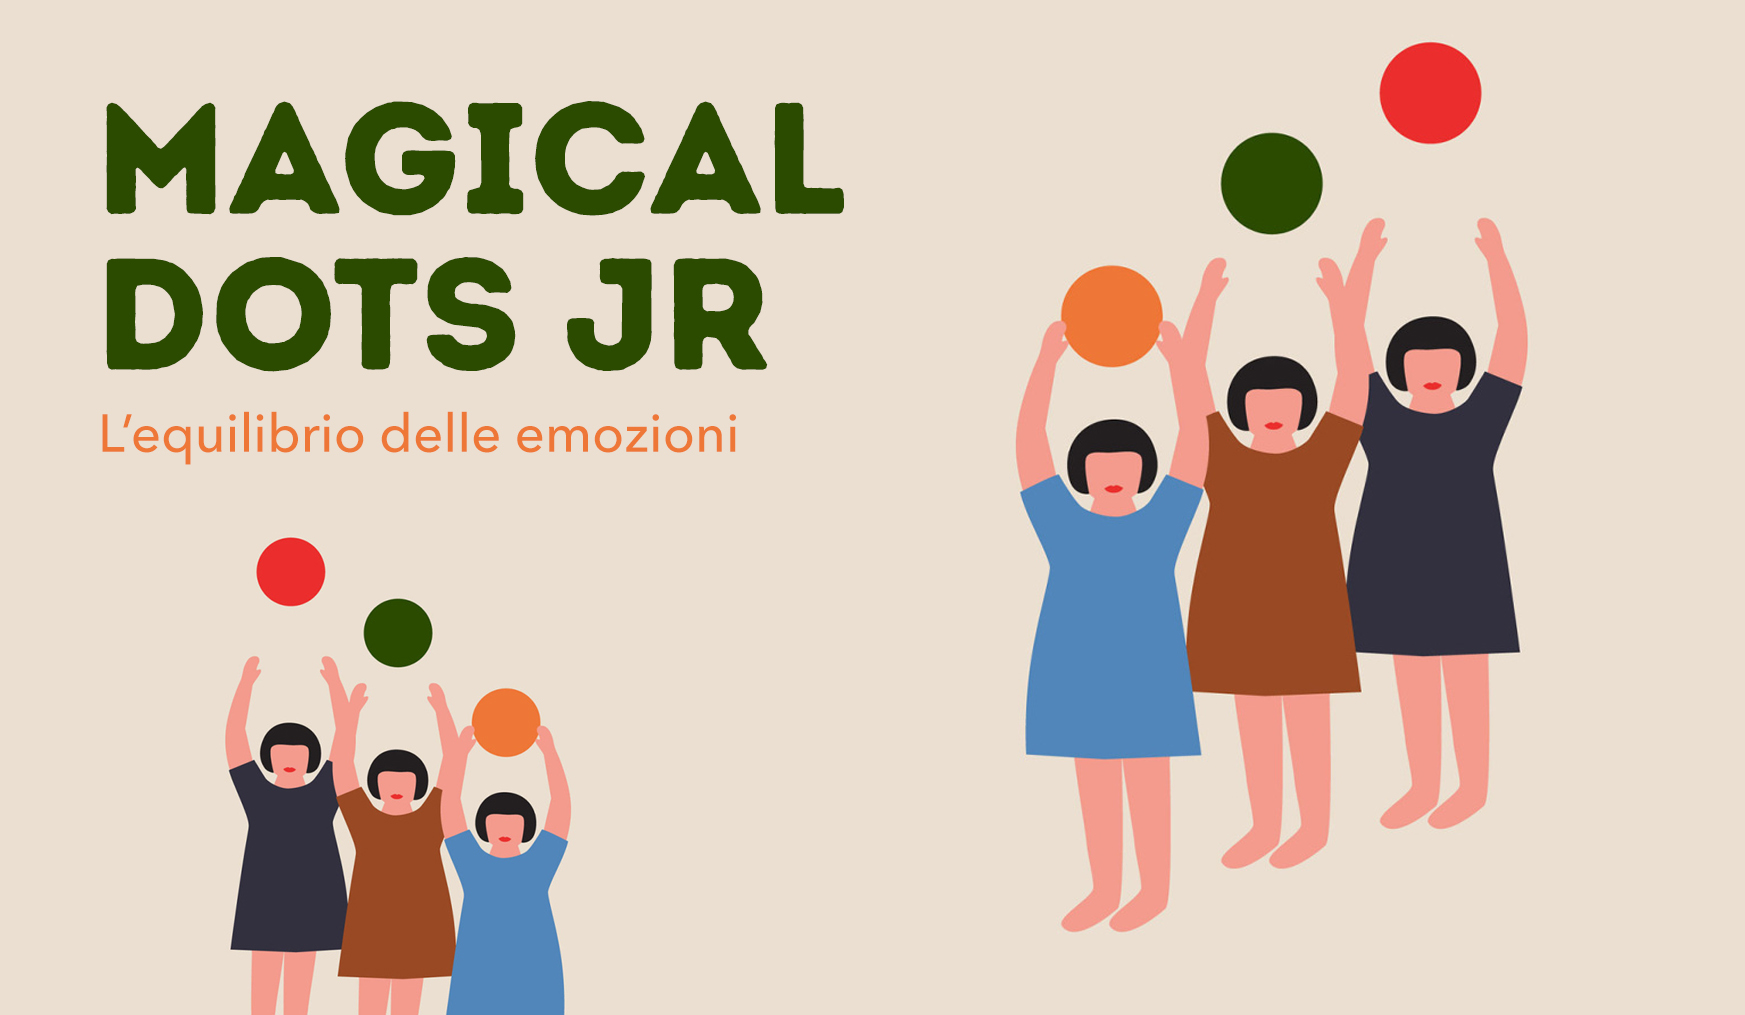 MAGICAL DOTS JR – Equilibrio delle emozioni